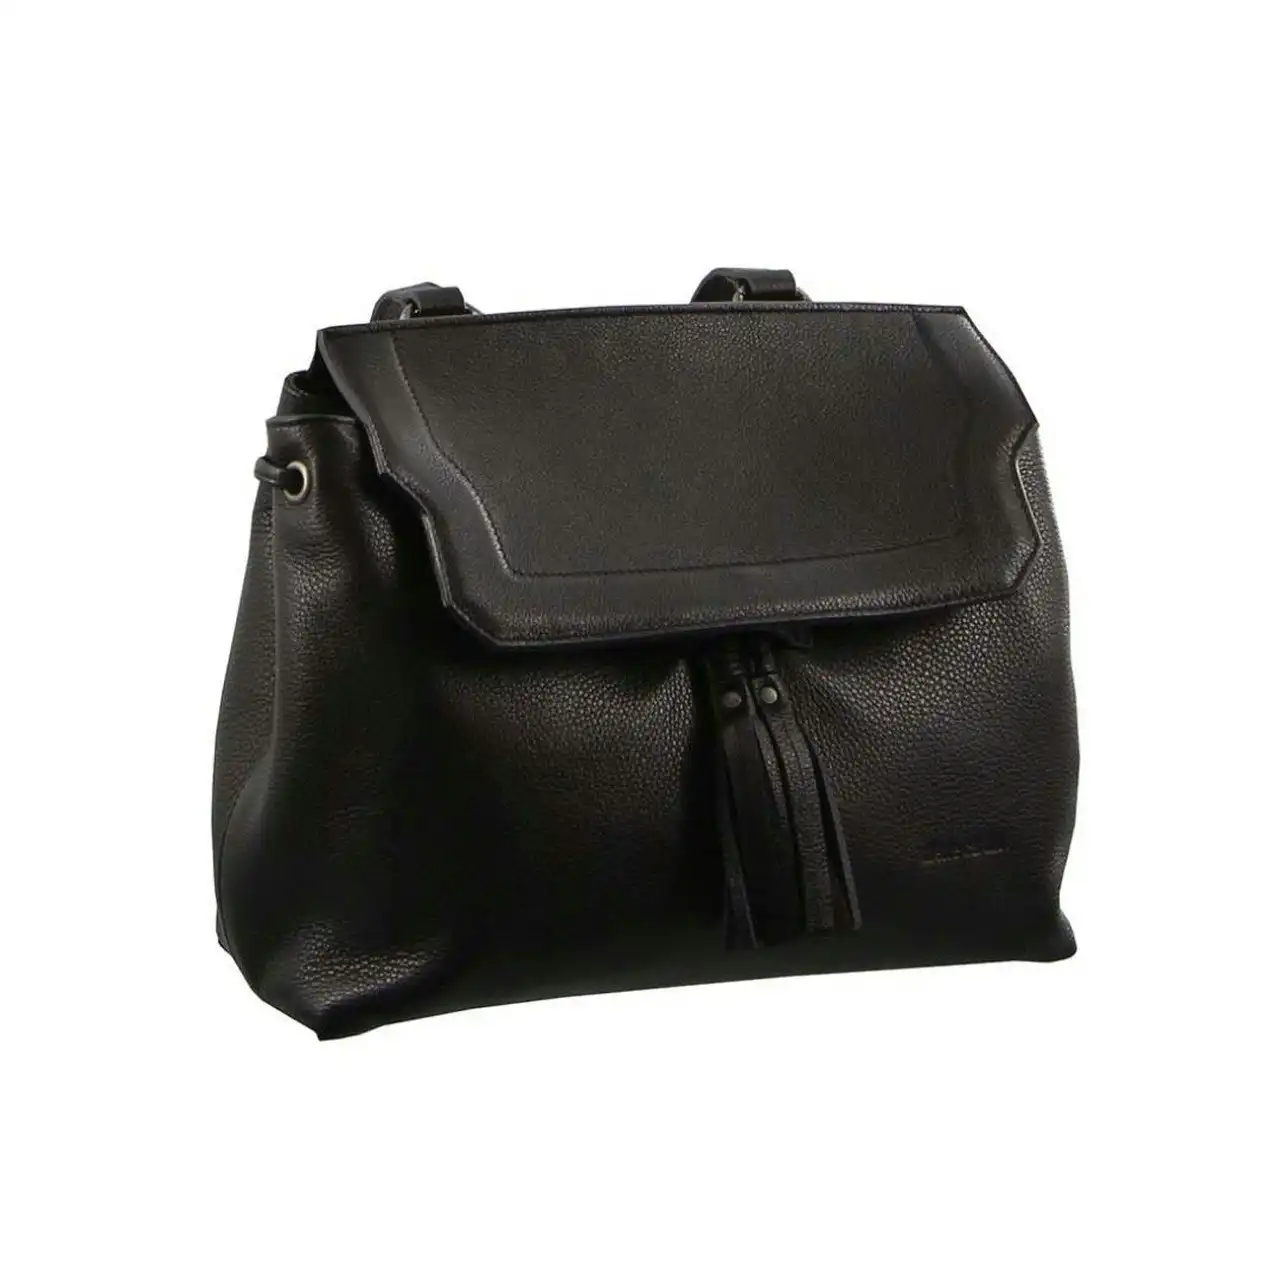 Pierre Cardin Women 25.5cm Leather Backpack Travel/Fashion Outdoor Work Bag BLK